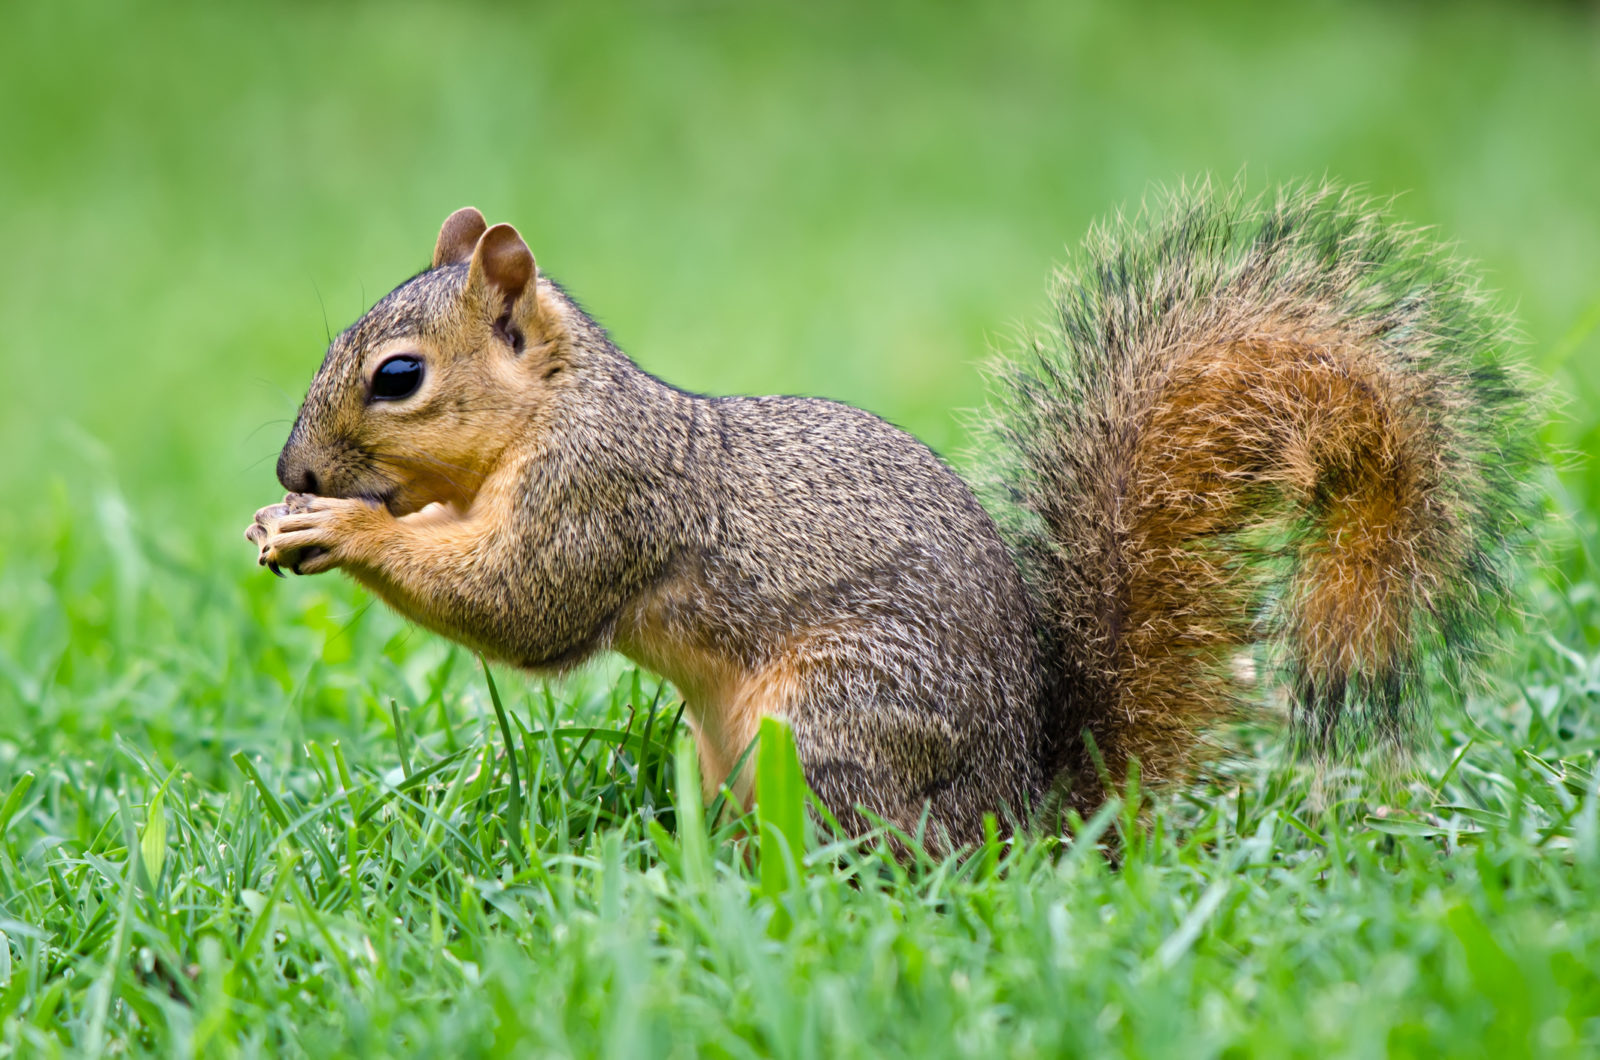 What’s The Best Squirrel Deterrent?